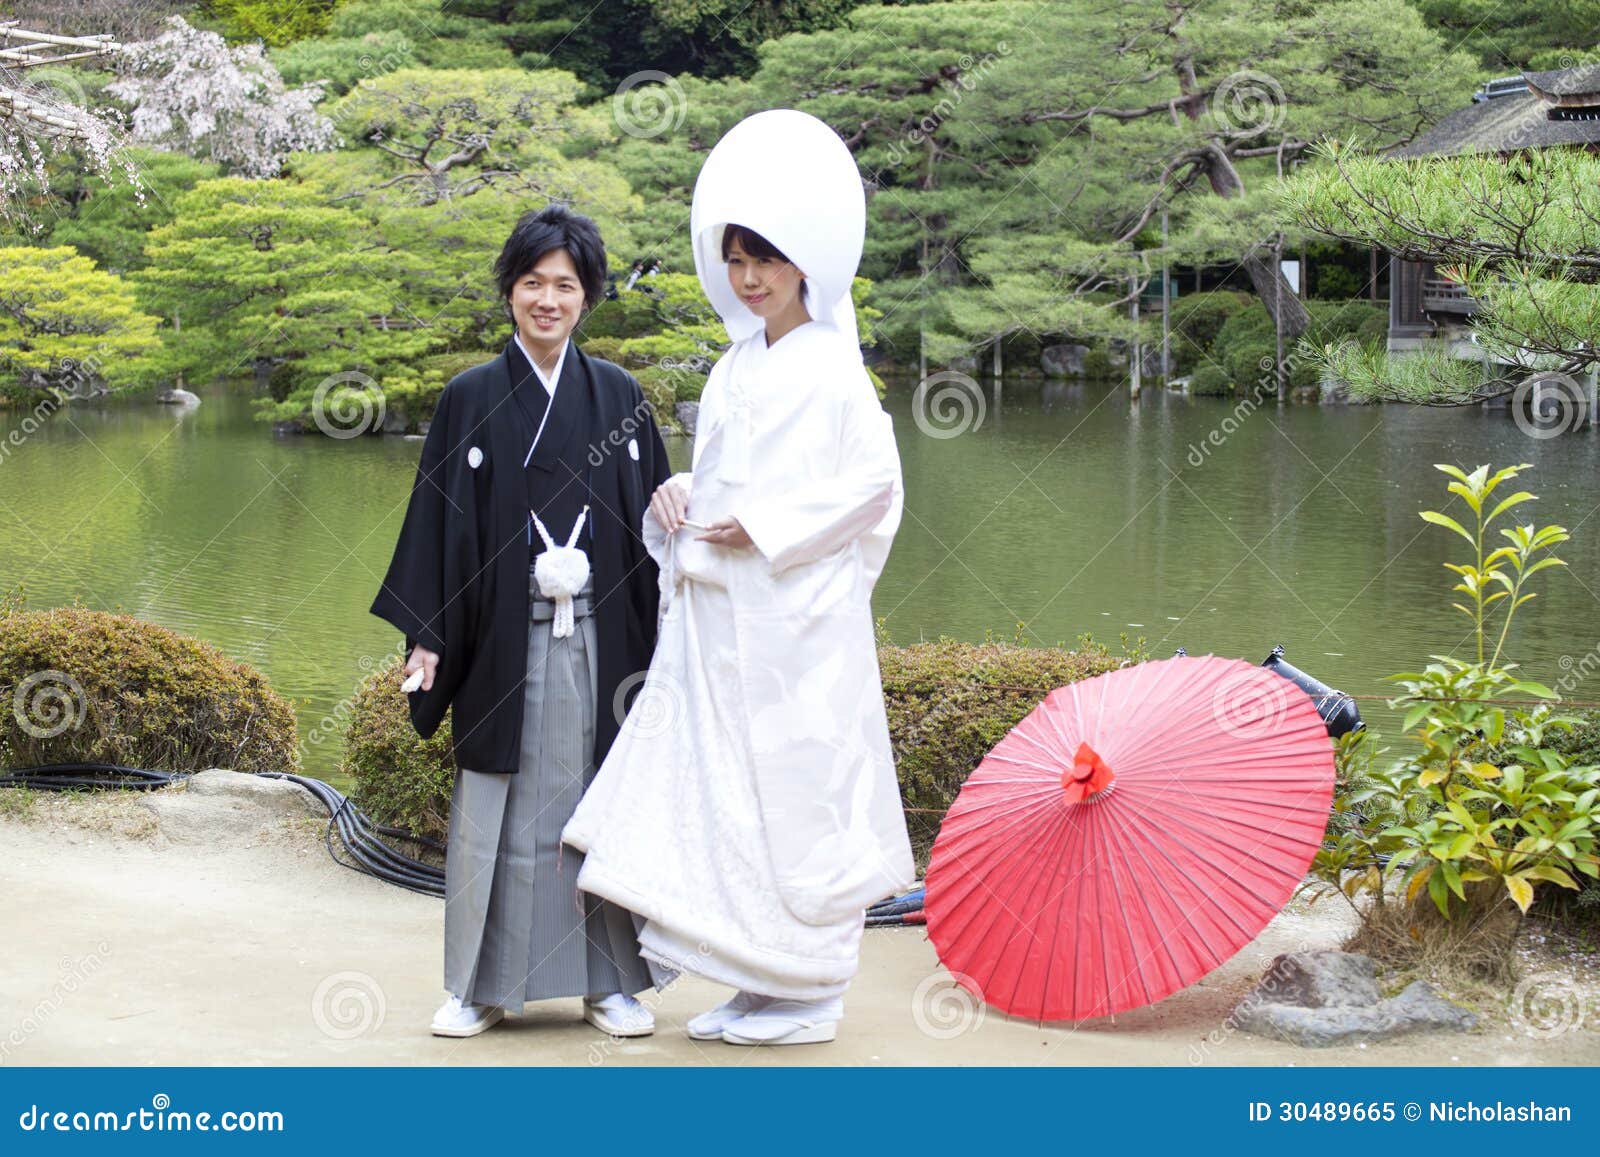  Japanese  Traditional Wedding  Dress  Editorial Image Image 